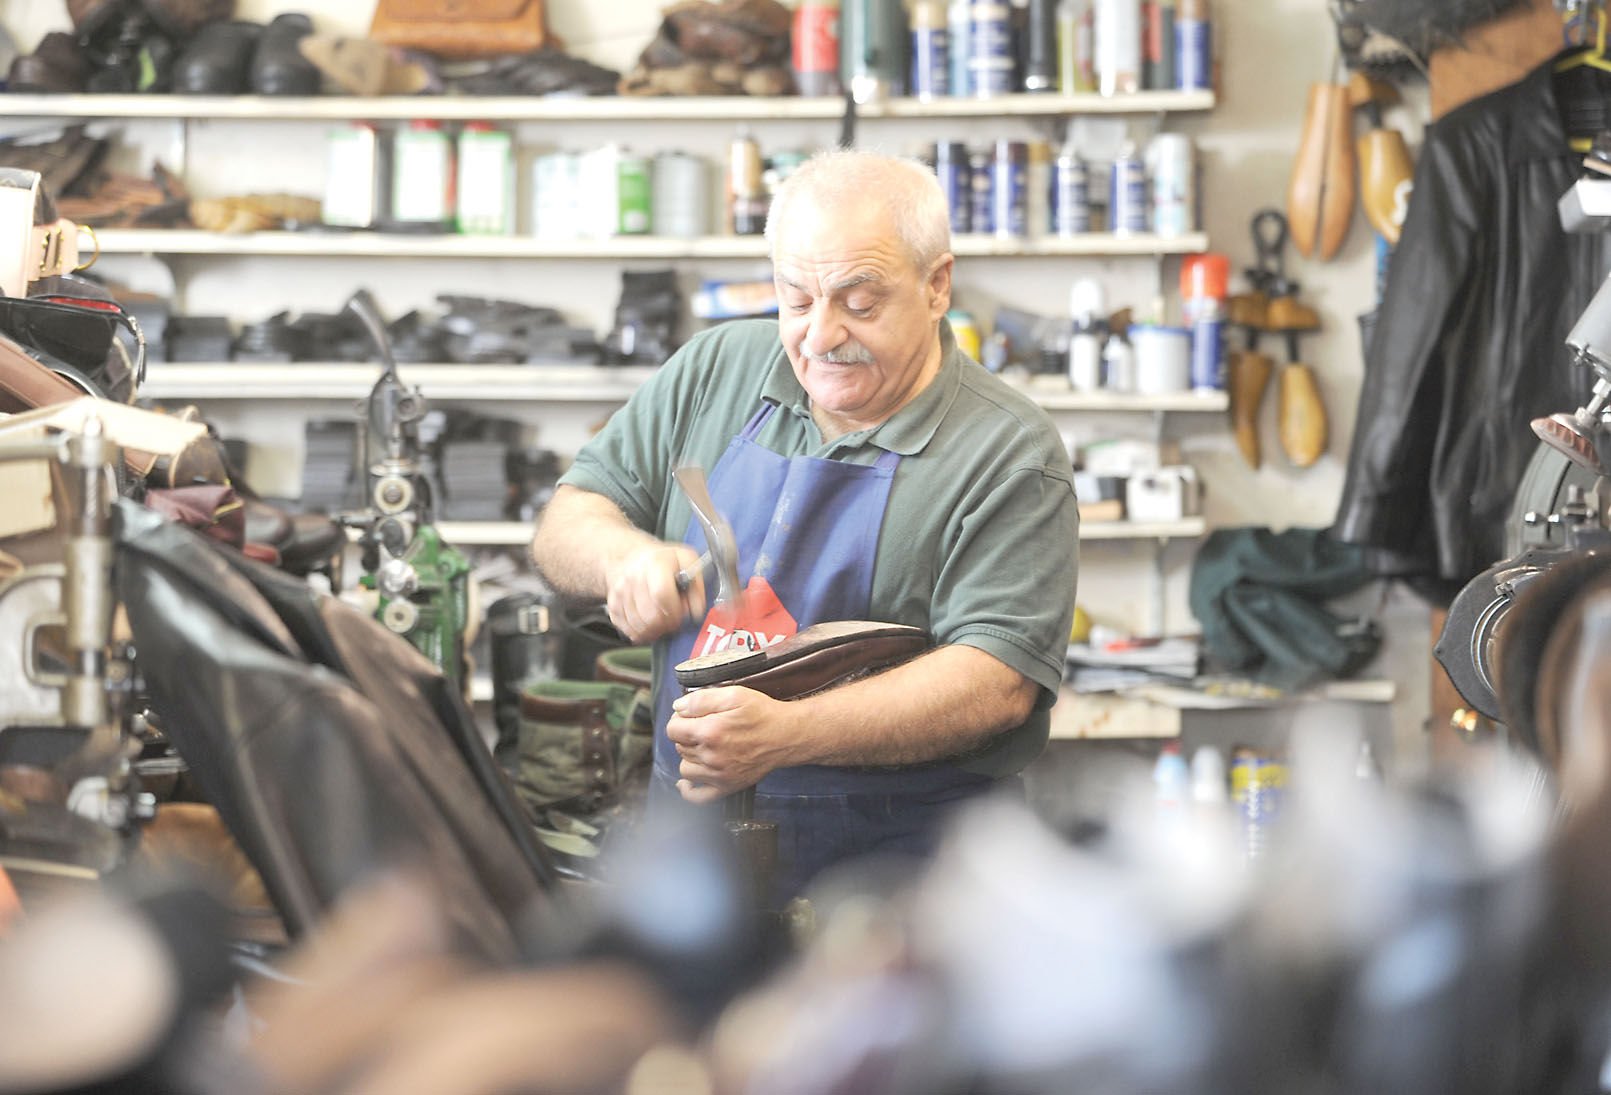 Shoe repairman helps customers' soles 